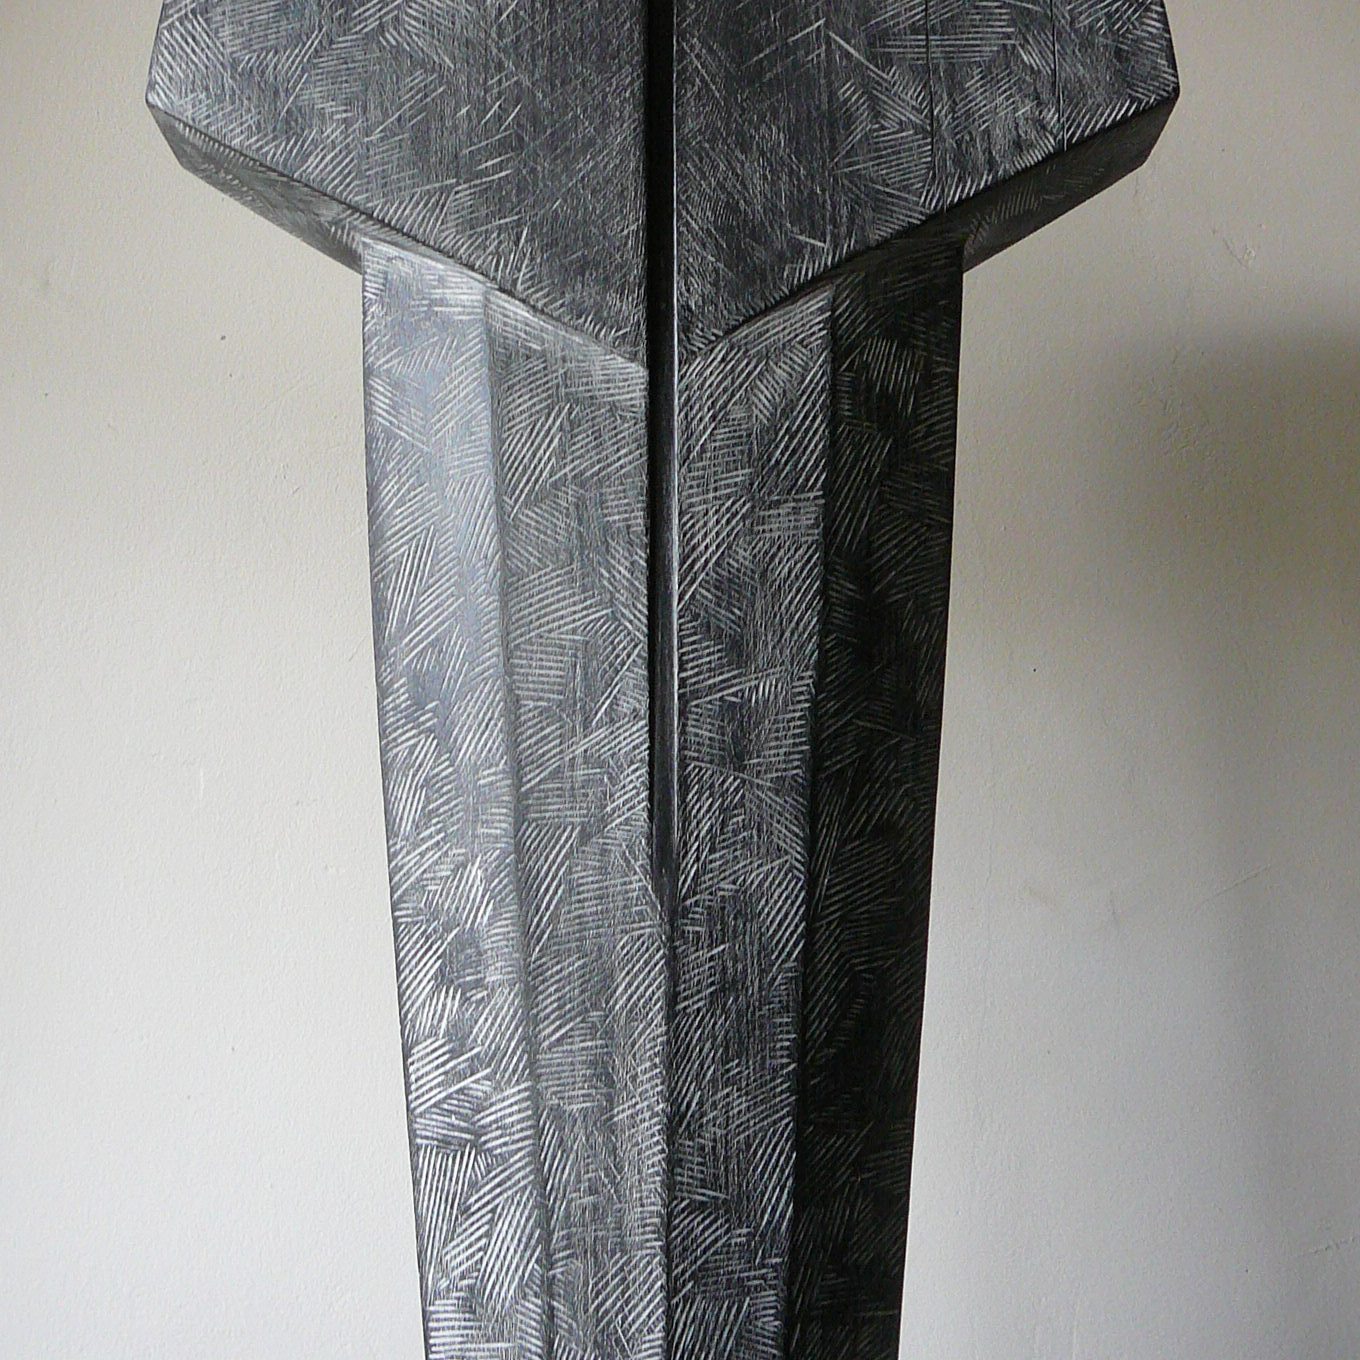 Torse II, Hêtre, H 50 x L 30 cm, 2019